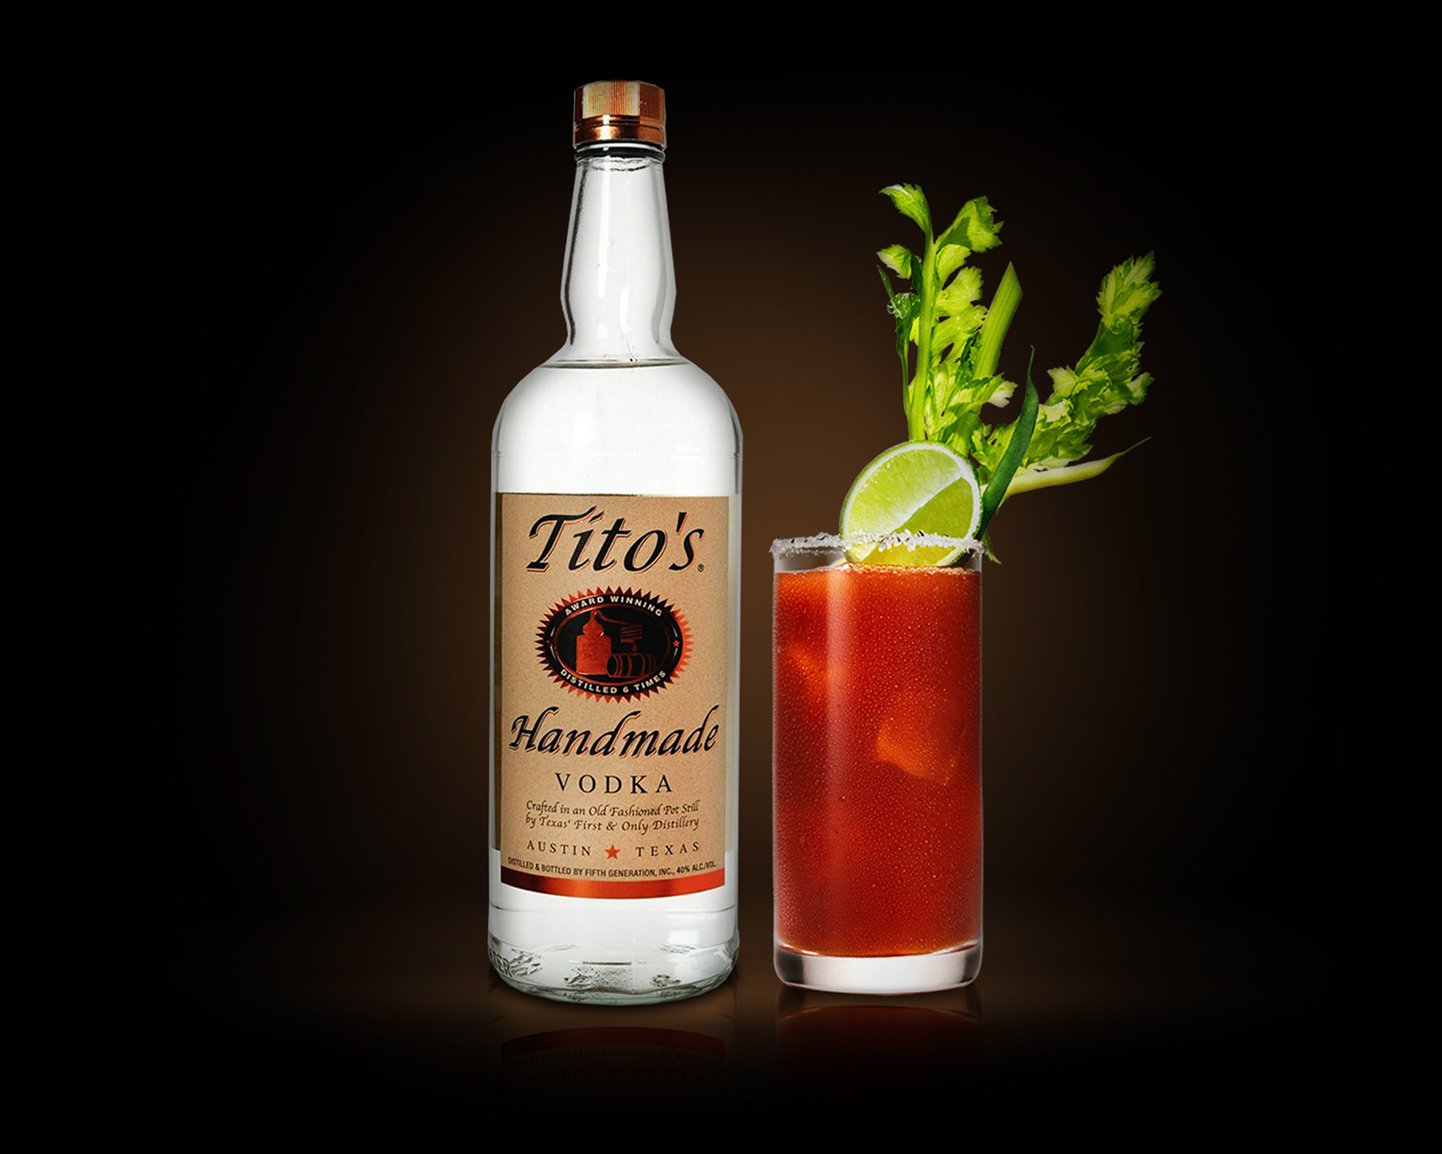 Tito's Handmade Vodka & Muddled Cocktail Gift Set